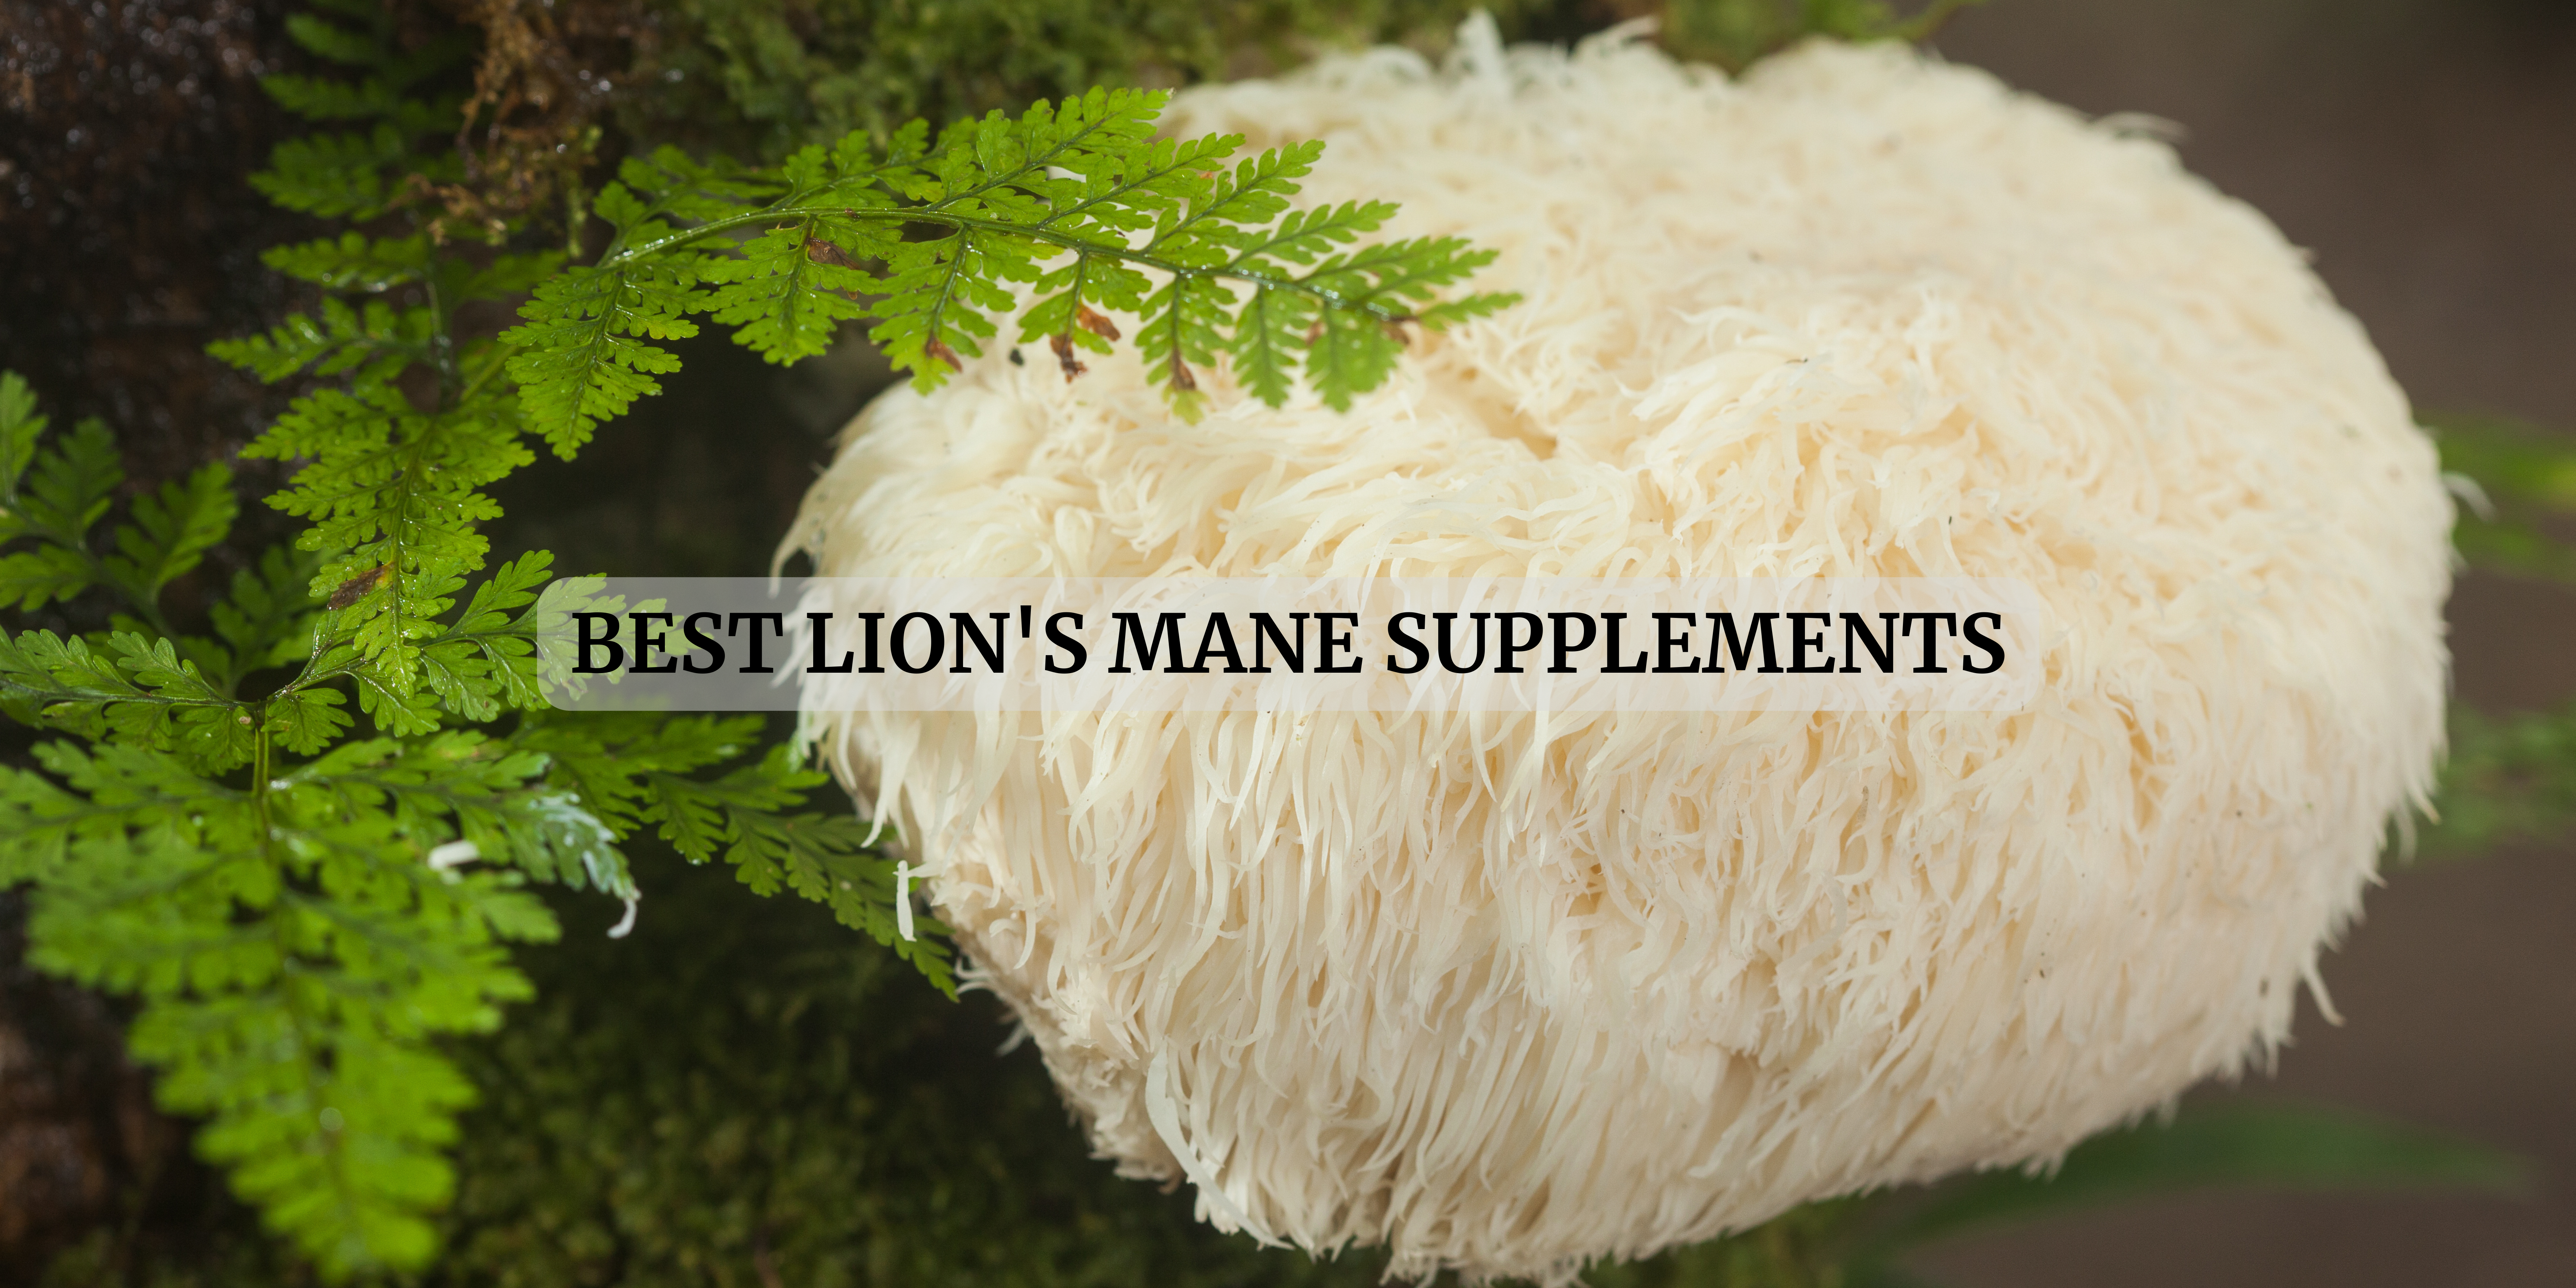 lion's mane supplements in UAE